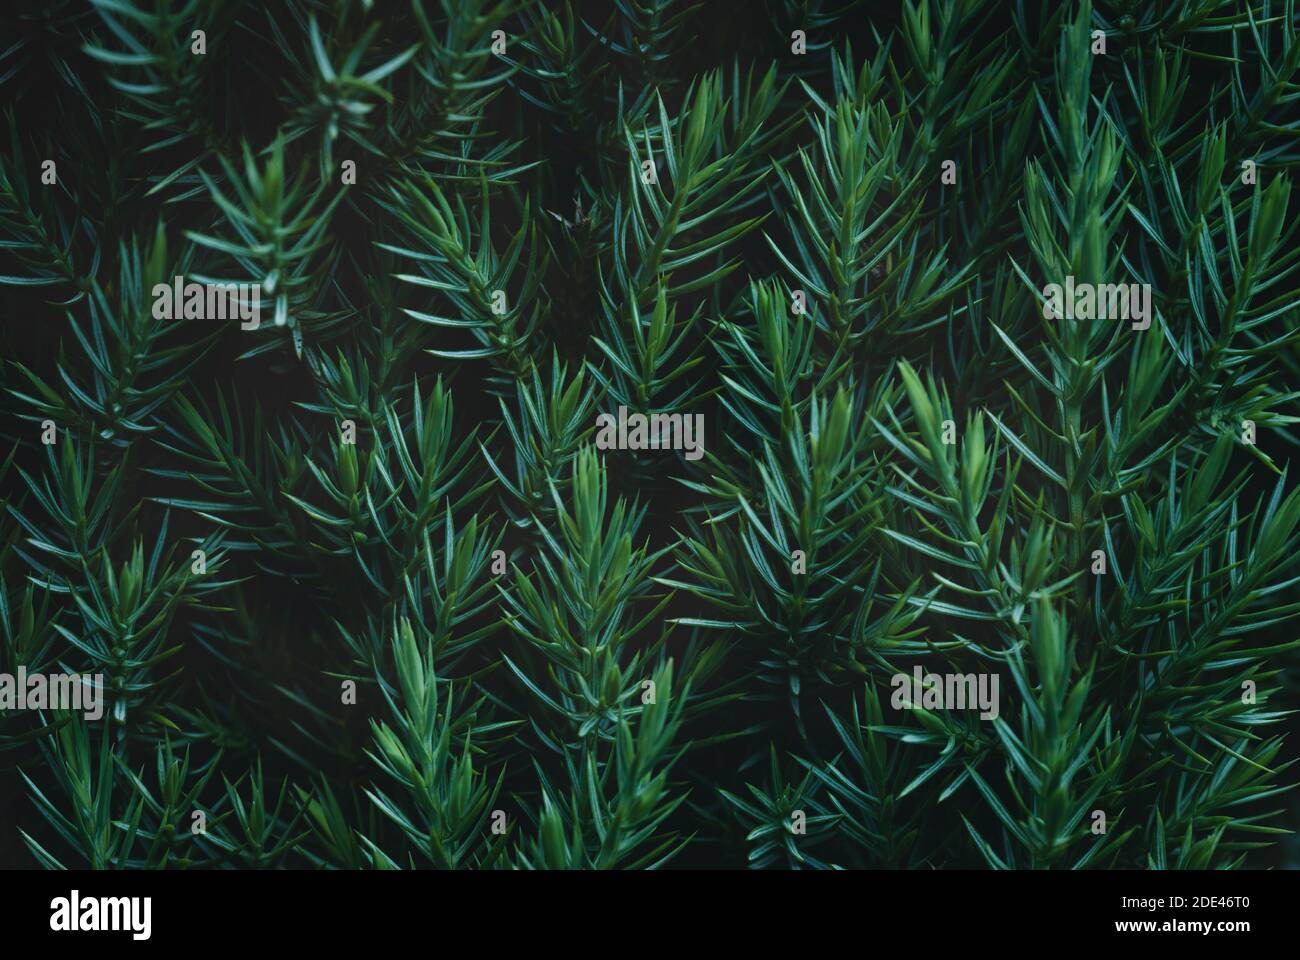 Juniper hedge texture in dark green tones, close up Stock Photo